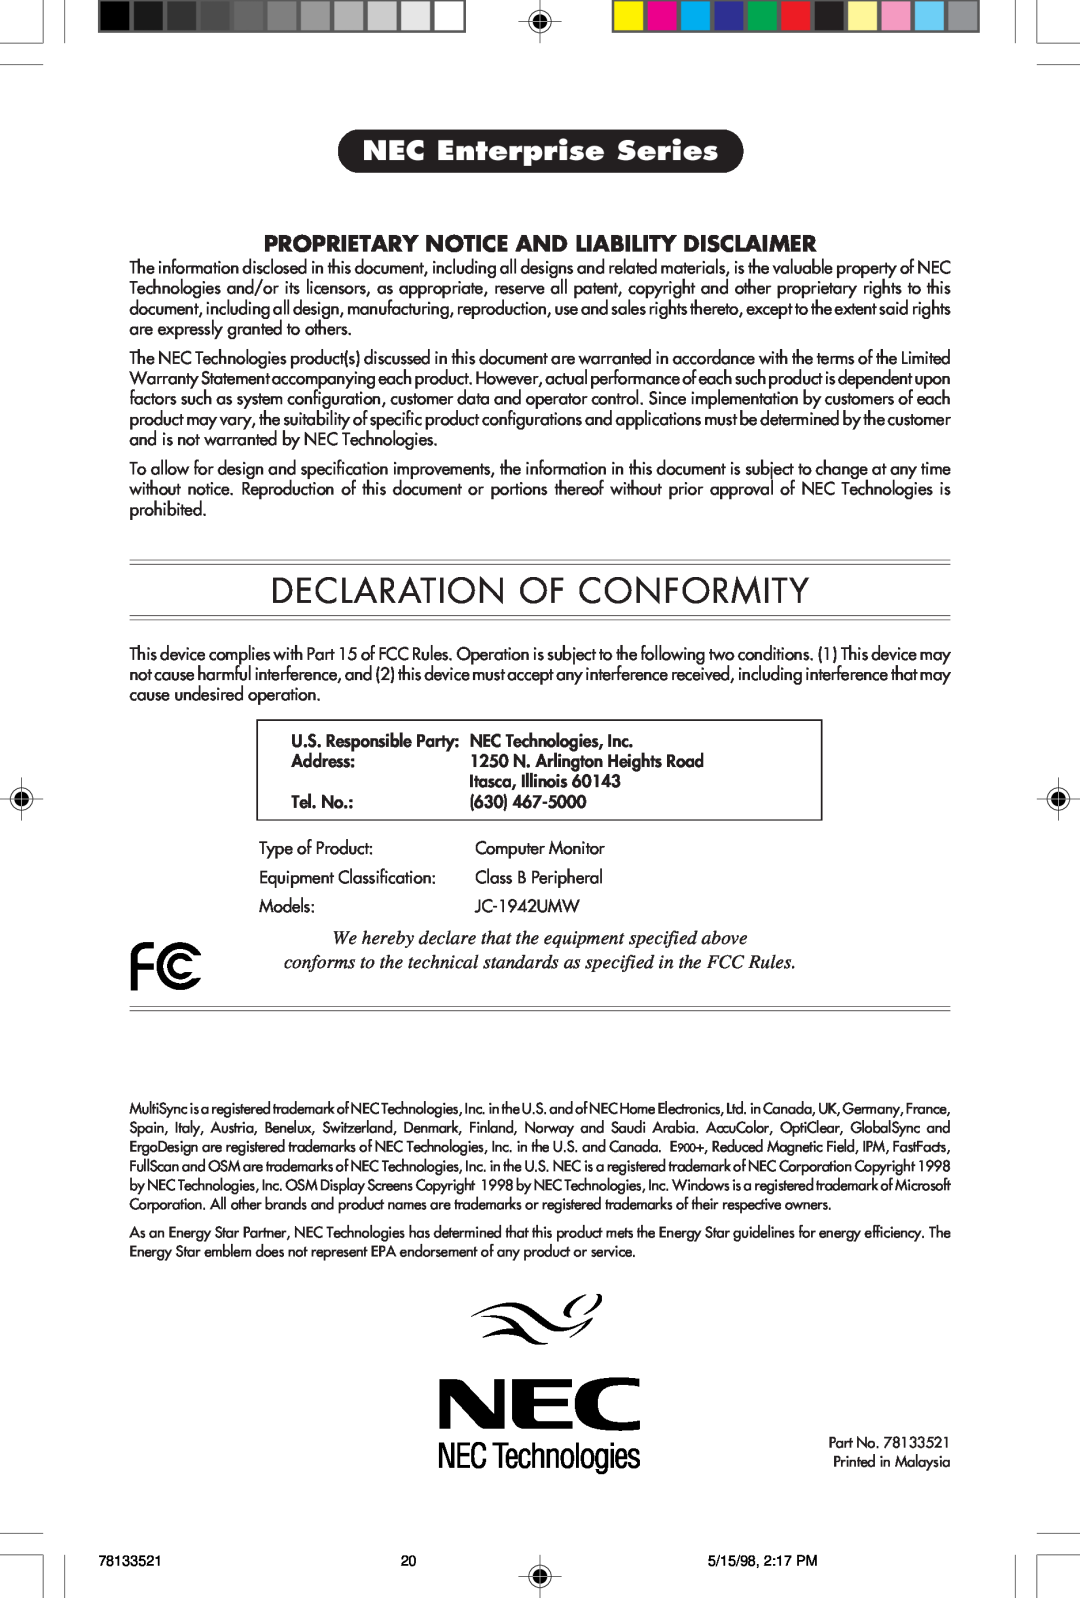 NEC E900+ user manual Declaration Of Conformity, NEC Enterprise Series, Proprietary Notice And Liability Disclaimer 